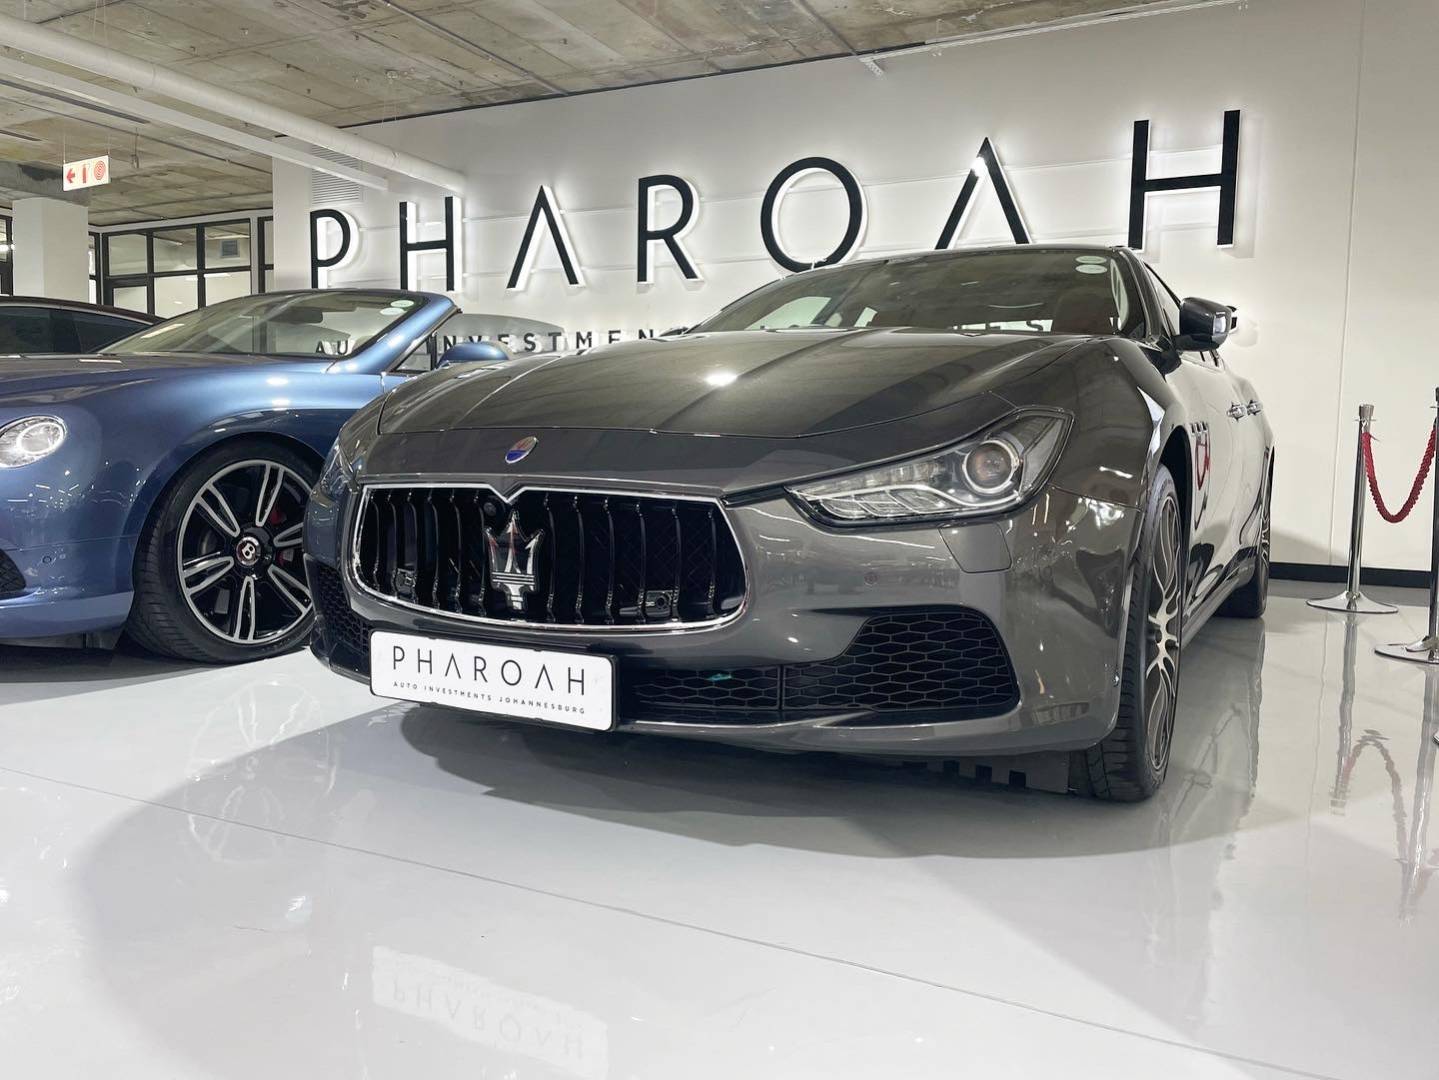 Pharoah Auto Investments